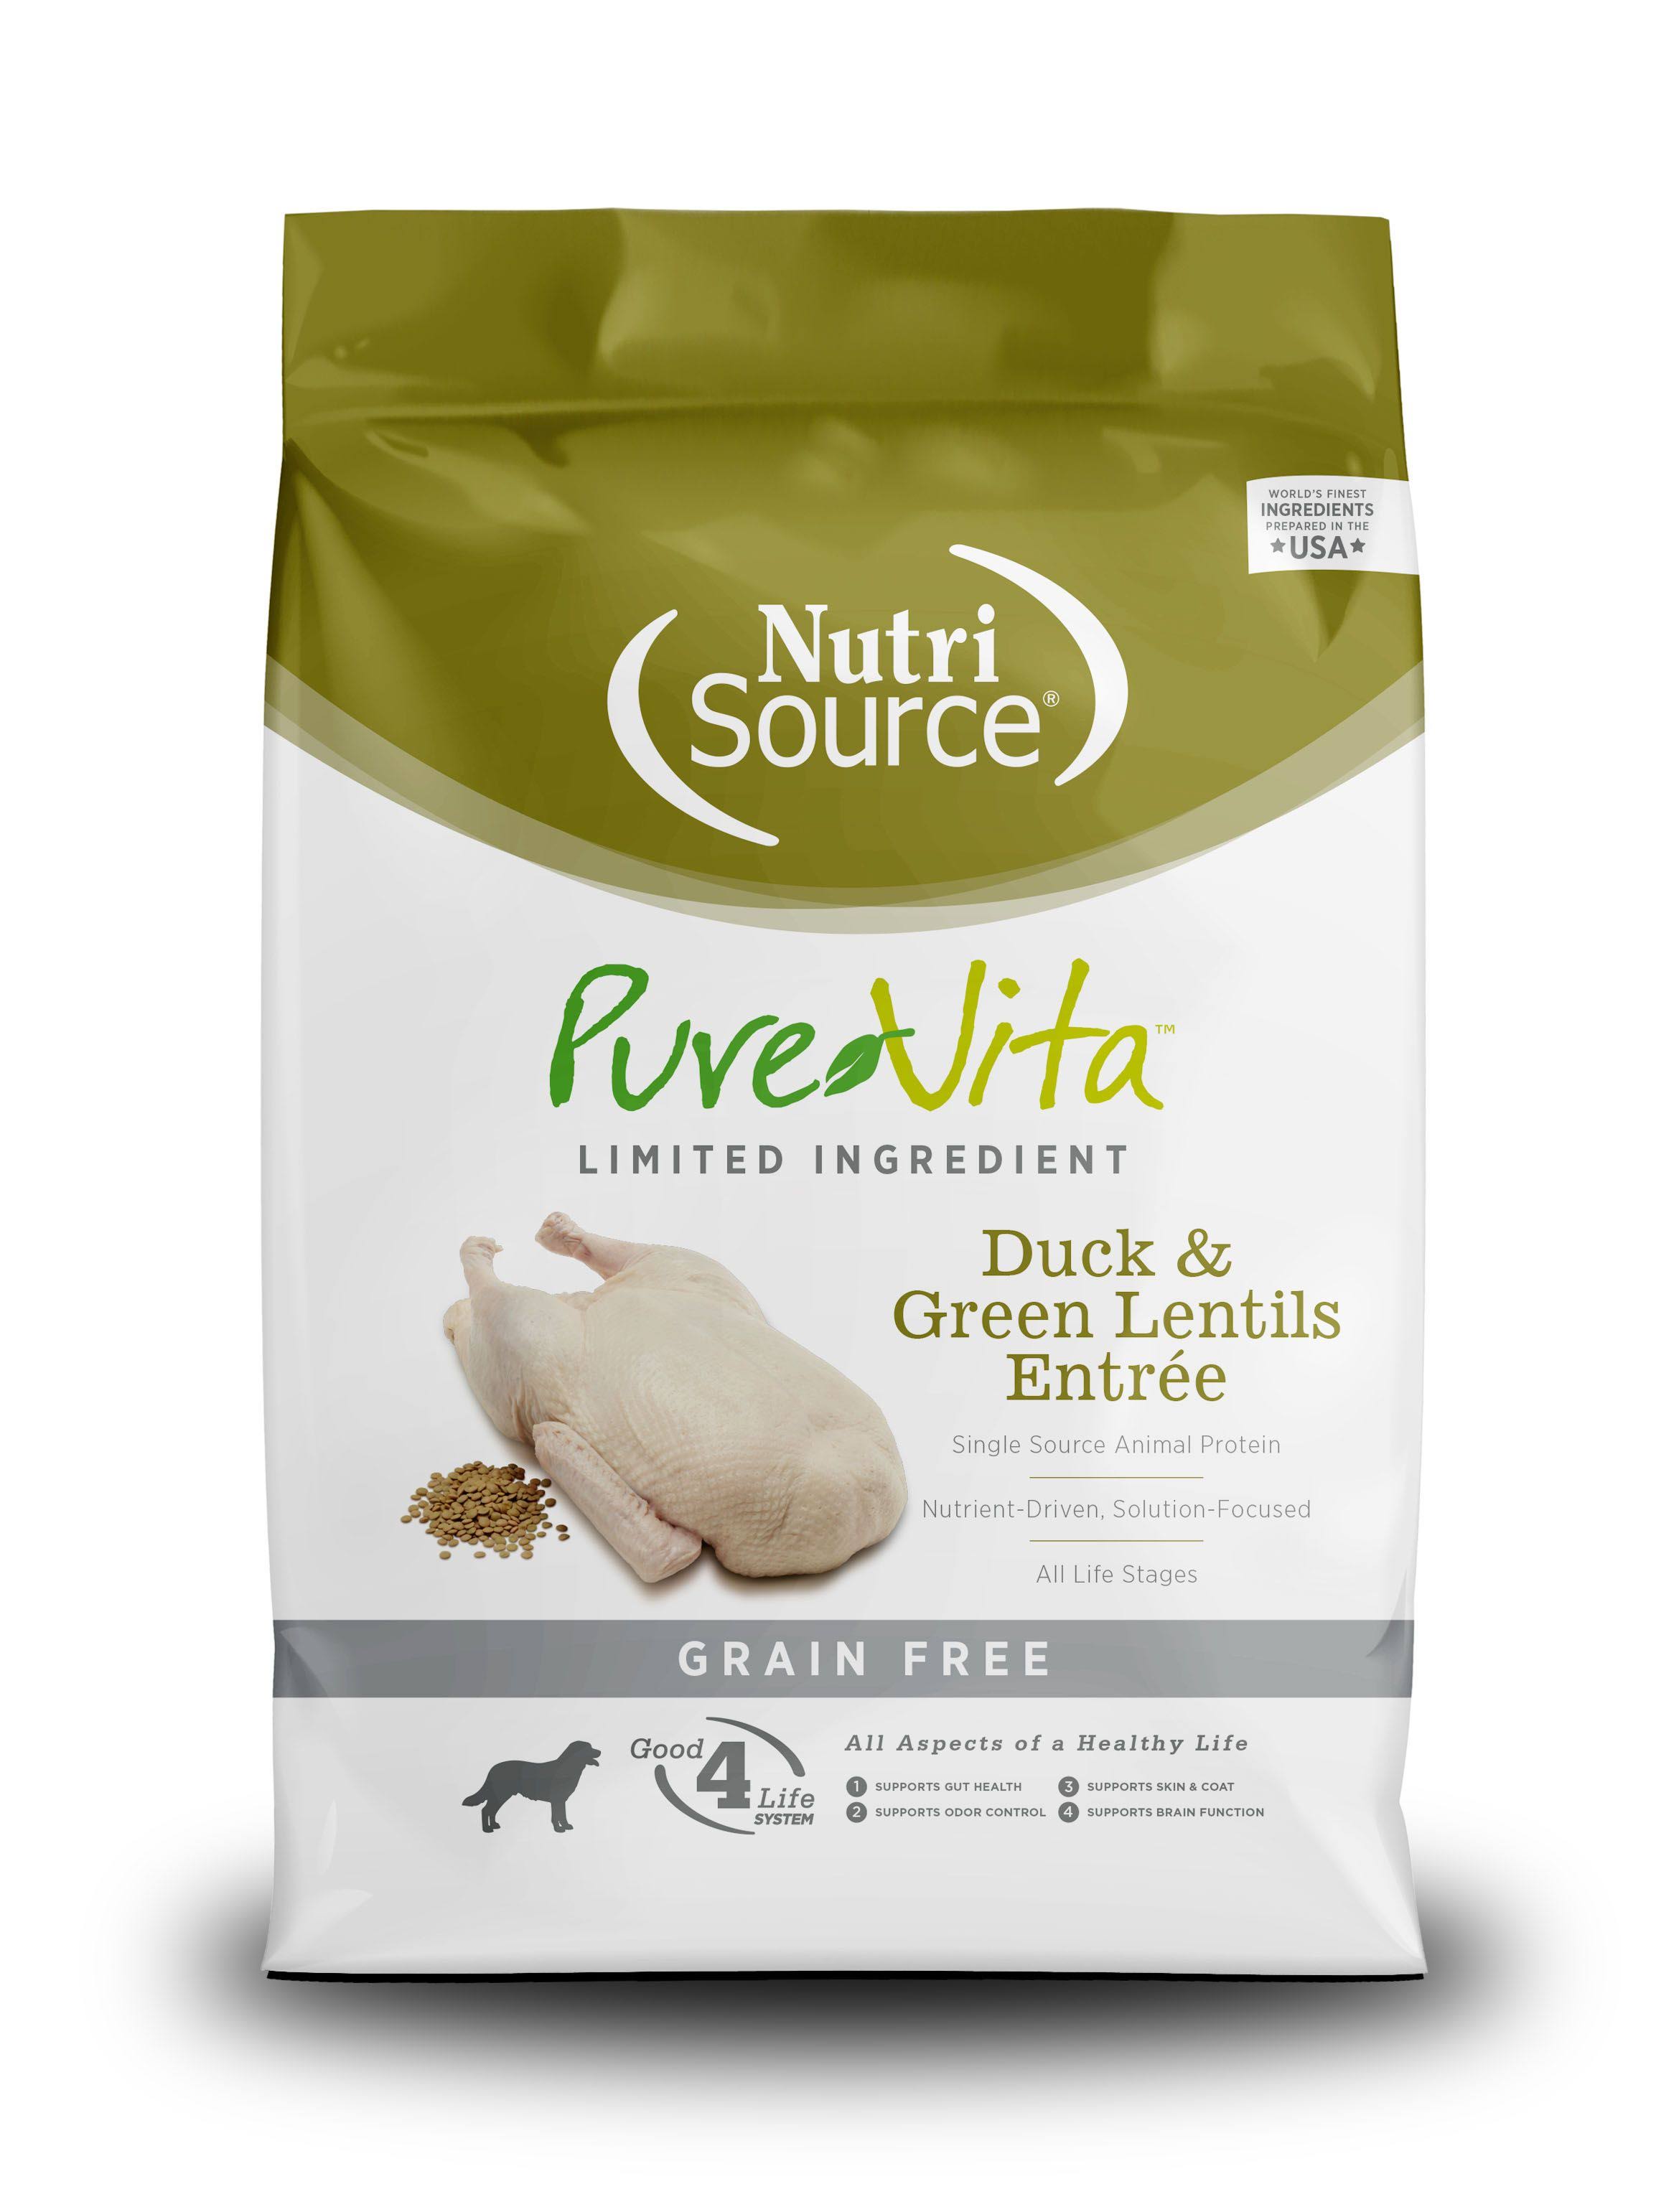 Purevita Grain Free Duck & Green Lentils Dog Food